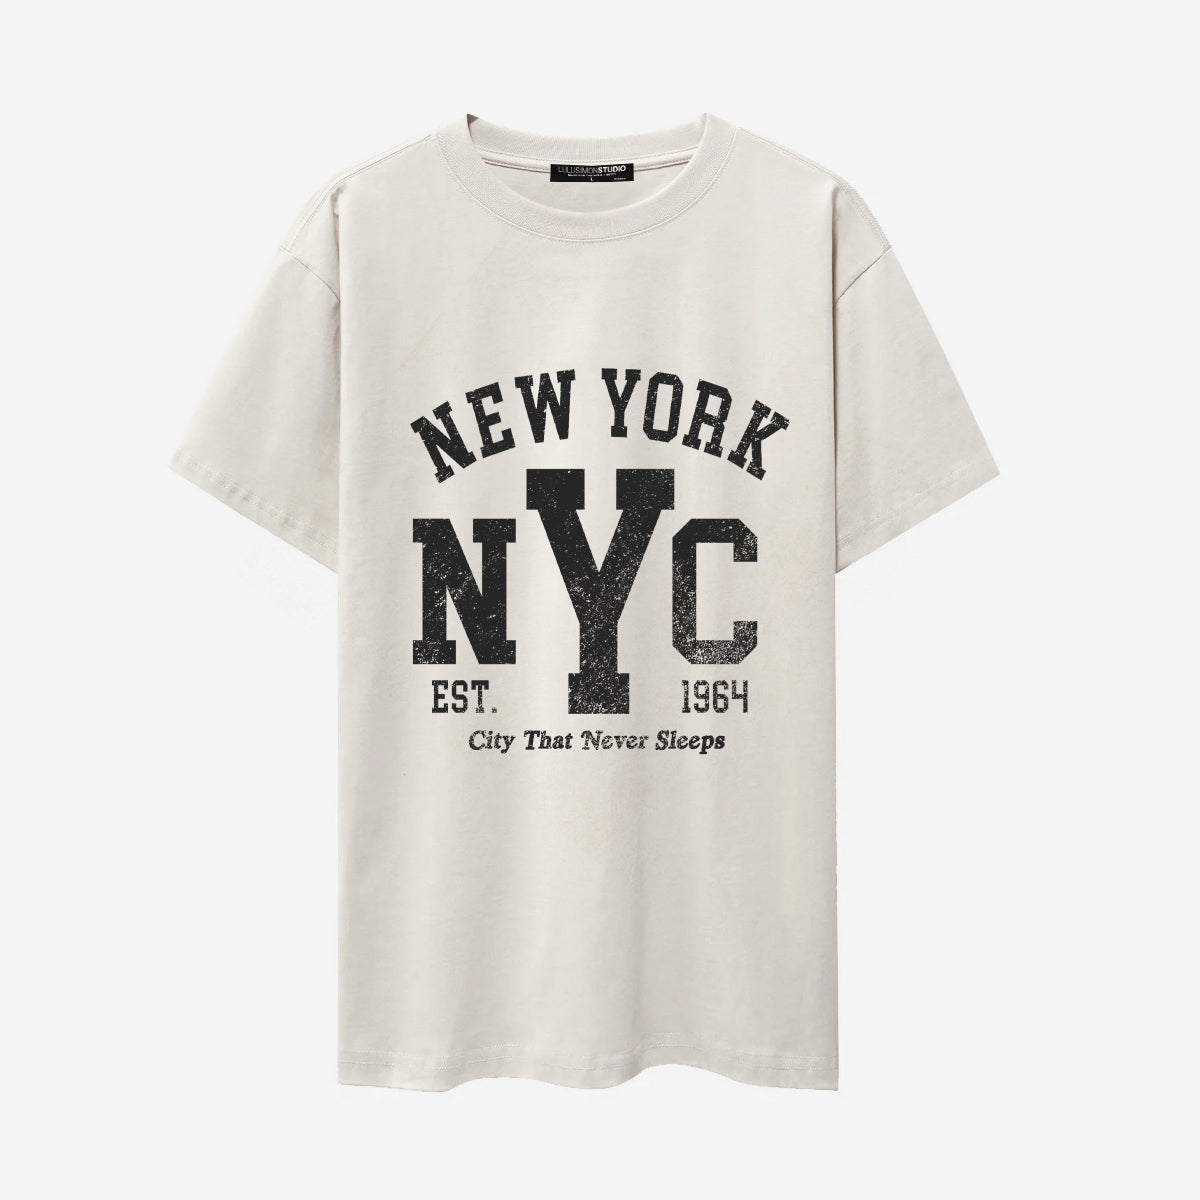 New York NYC Heavyweight Cotton Tee